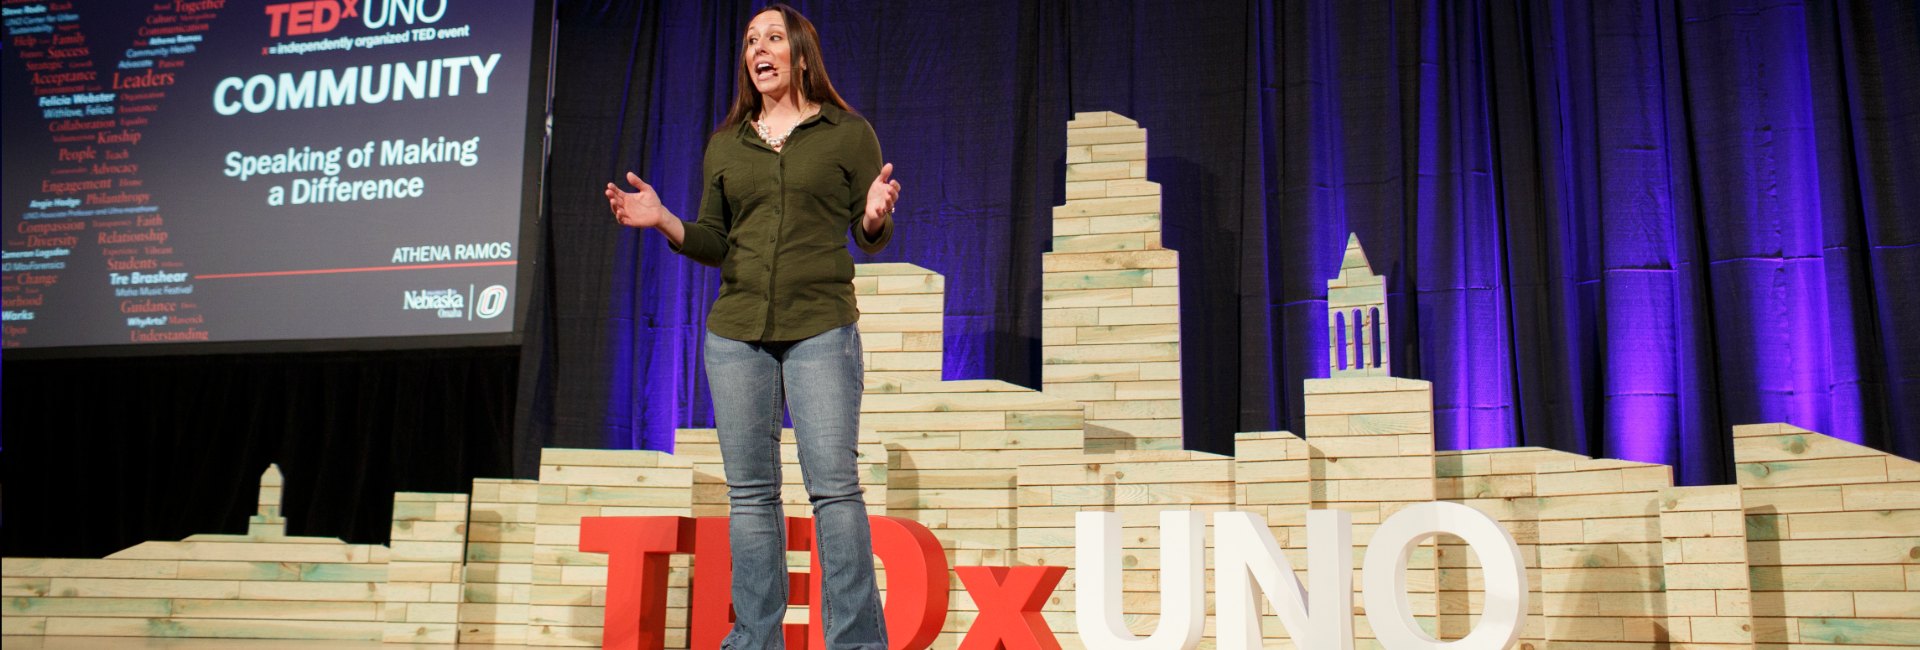 Athena Ramos, TEDxUNO 2015 speaker